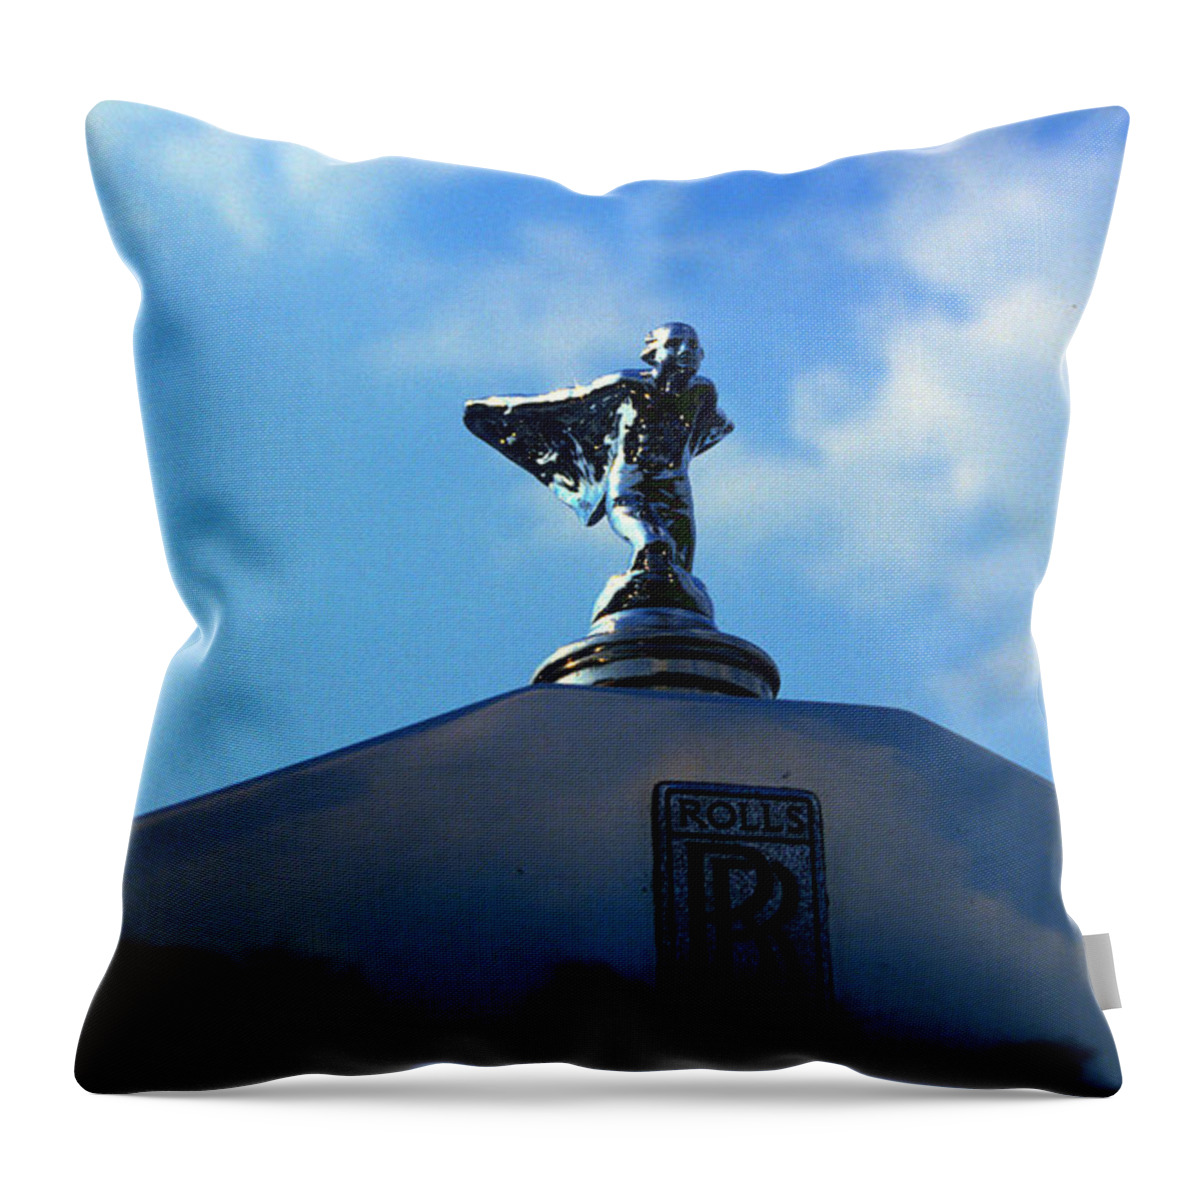 Rolls Throw Pillow featuring the photograph Rolls Royce Spirit of Ecstasy Bonnet Mascot by Gordon James